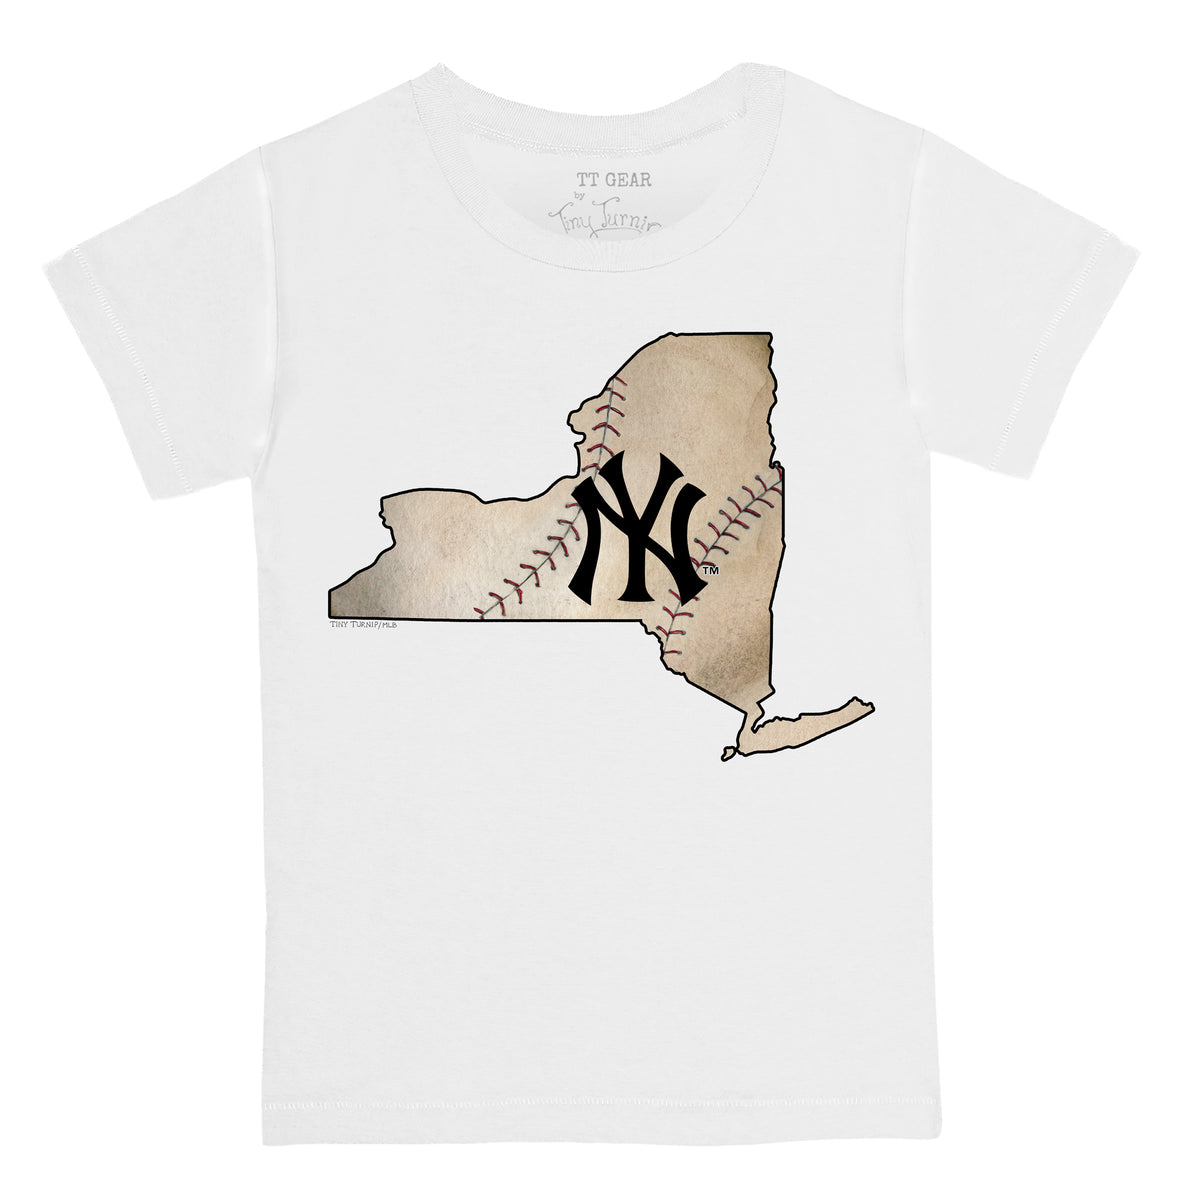 Lids New York Yankees Tiny Turnip Youth Baseball Flag T-Shirt